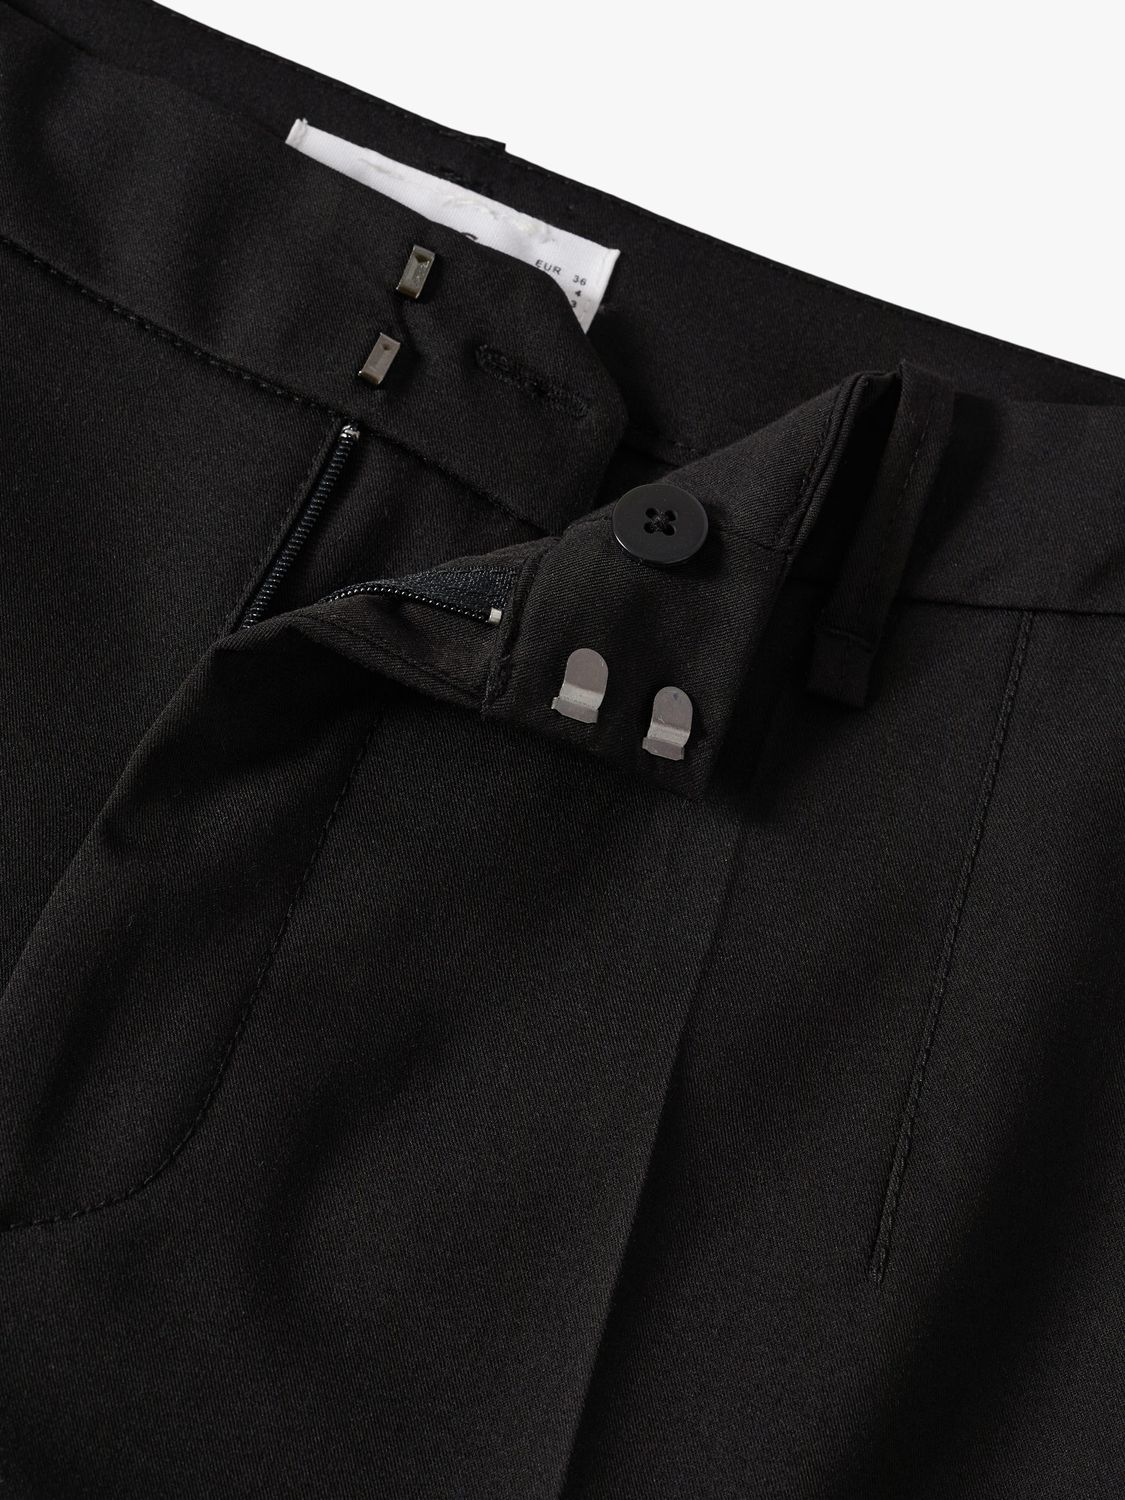 Mango Greta Suit Trousers, Black at John Lewis & Partners